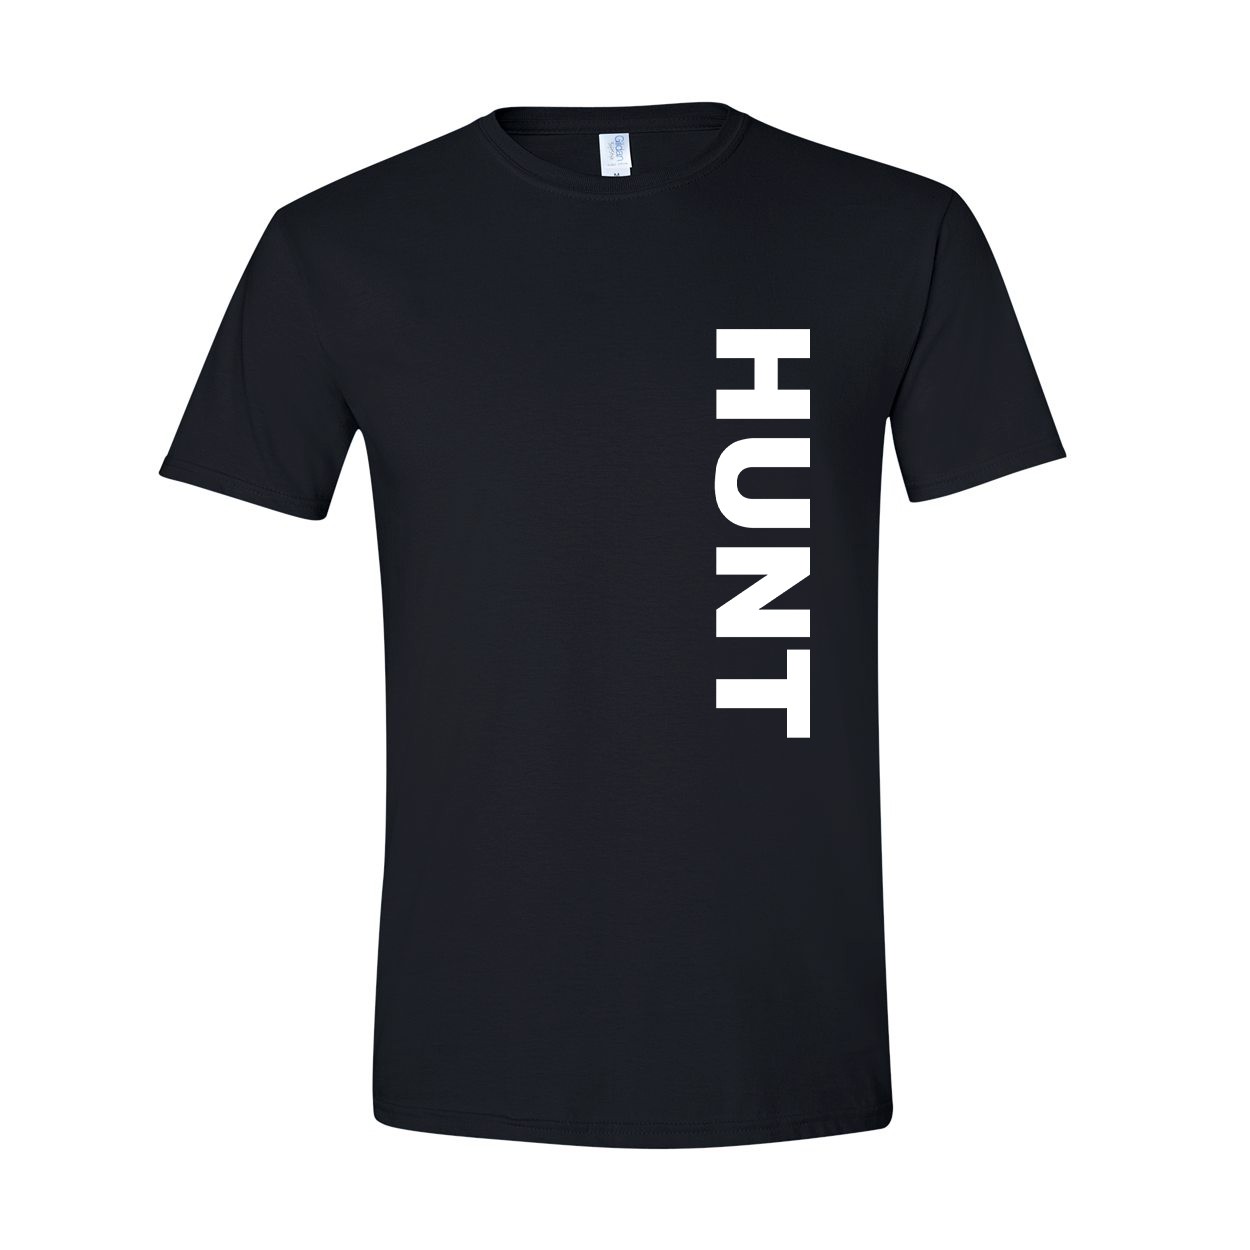 Hunt Brand Logo Classic Vertical T-Shirt Black (White Logo)